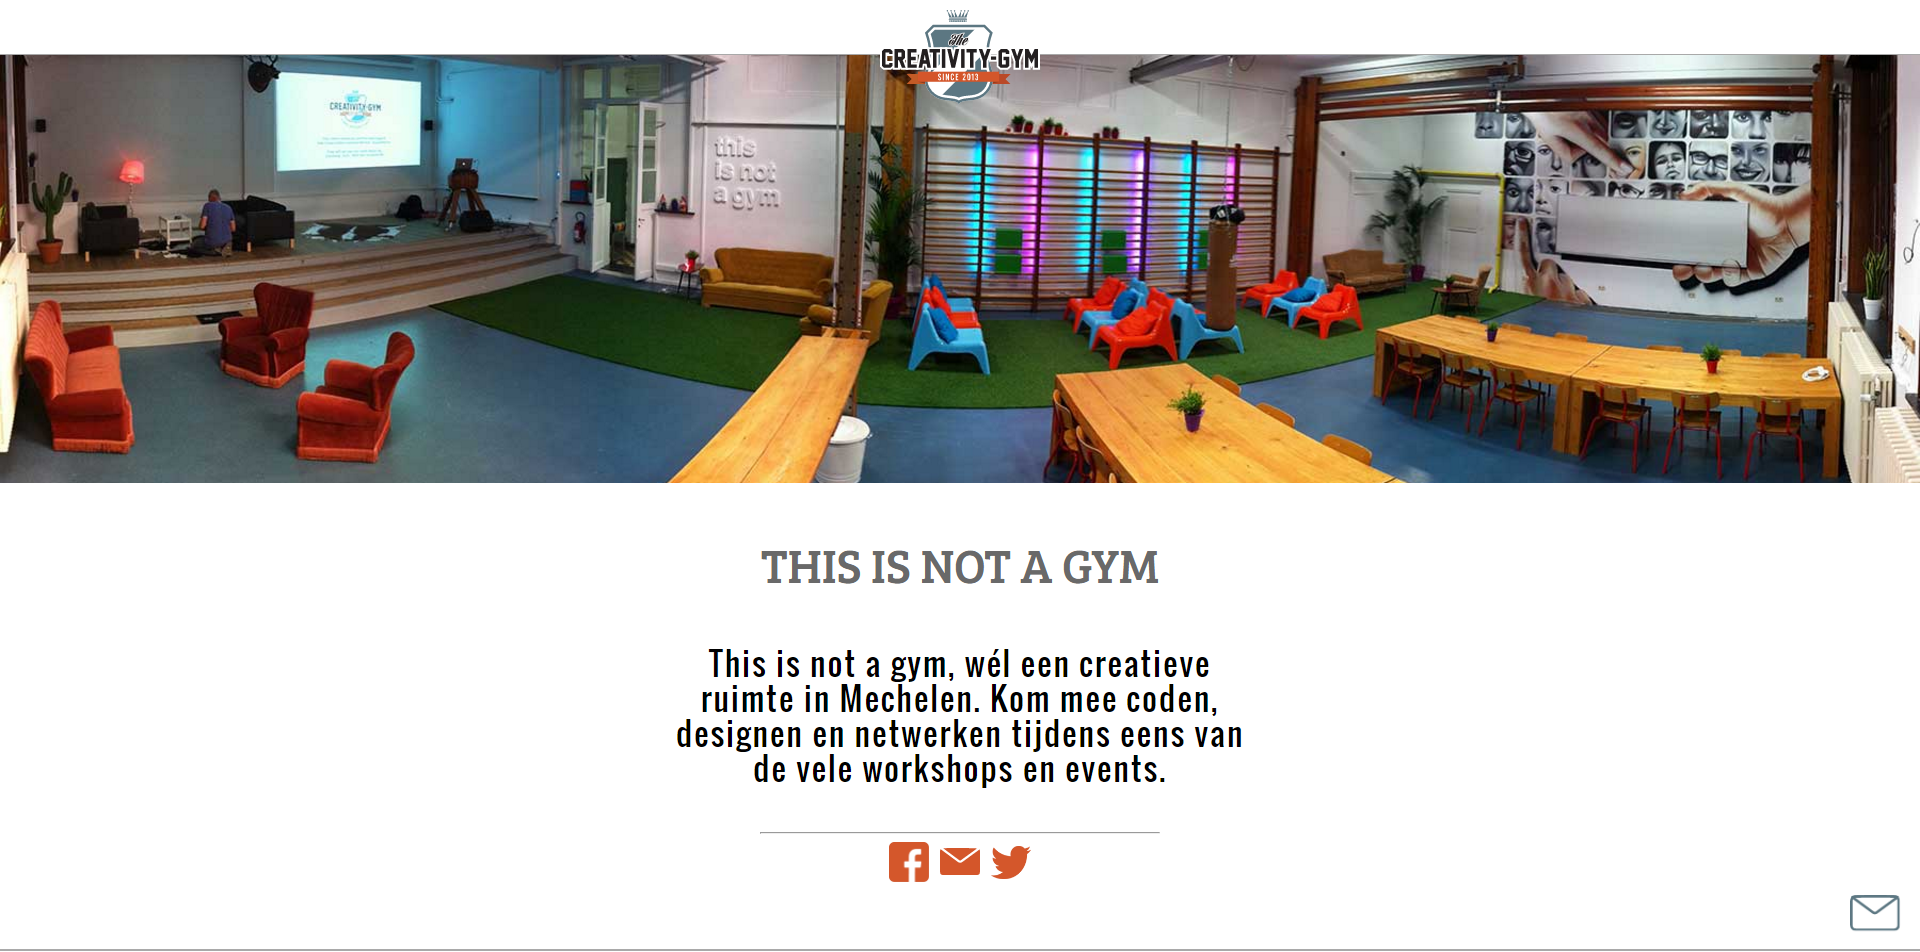 Website creativity gym